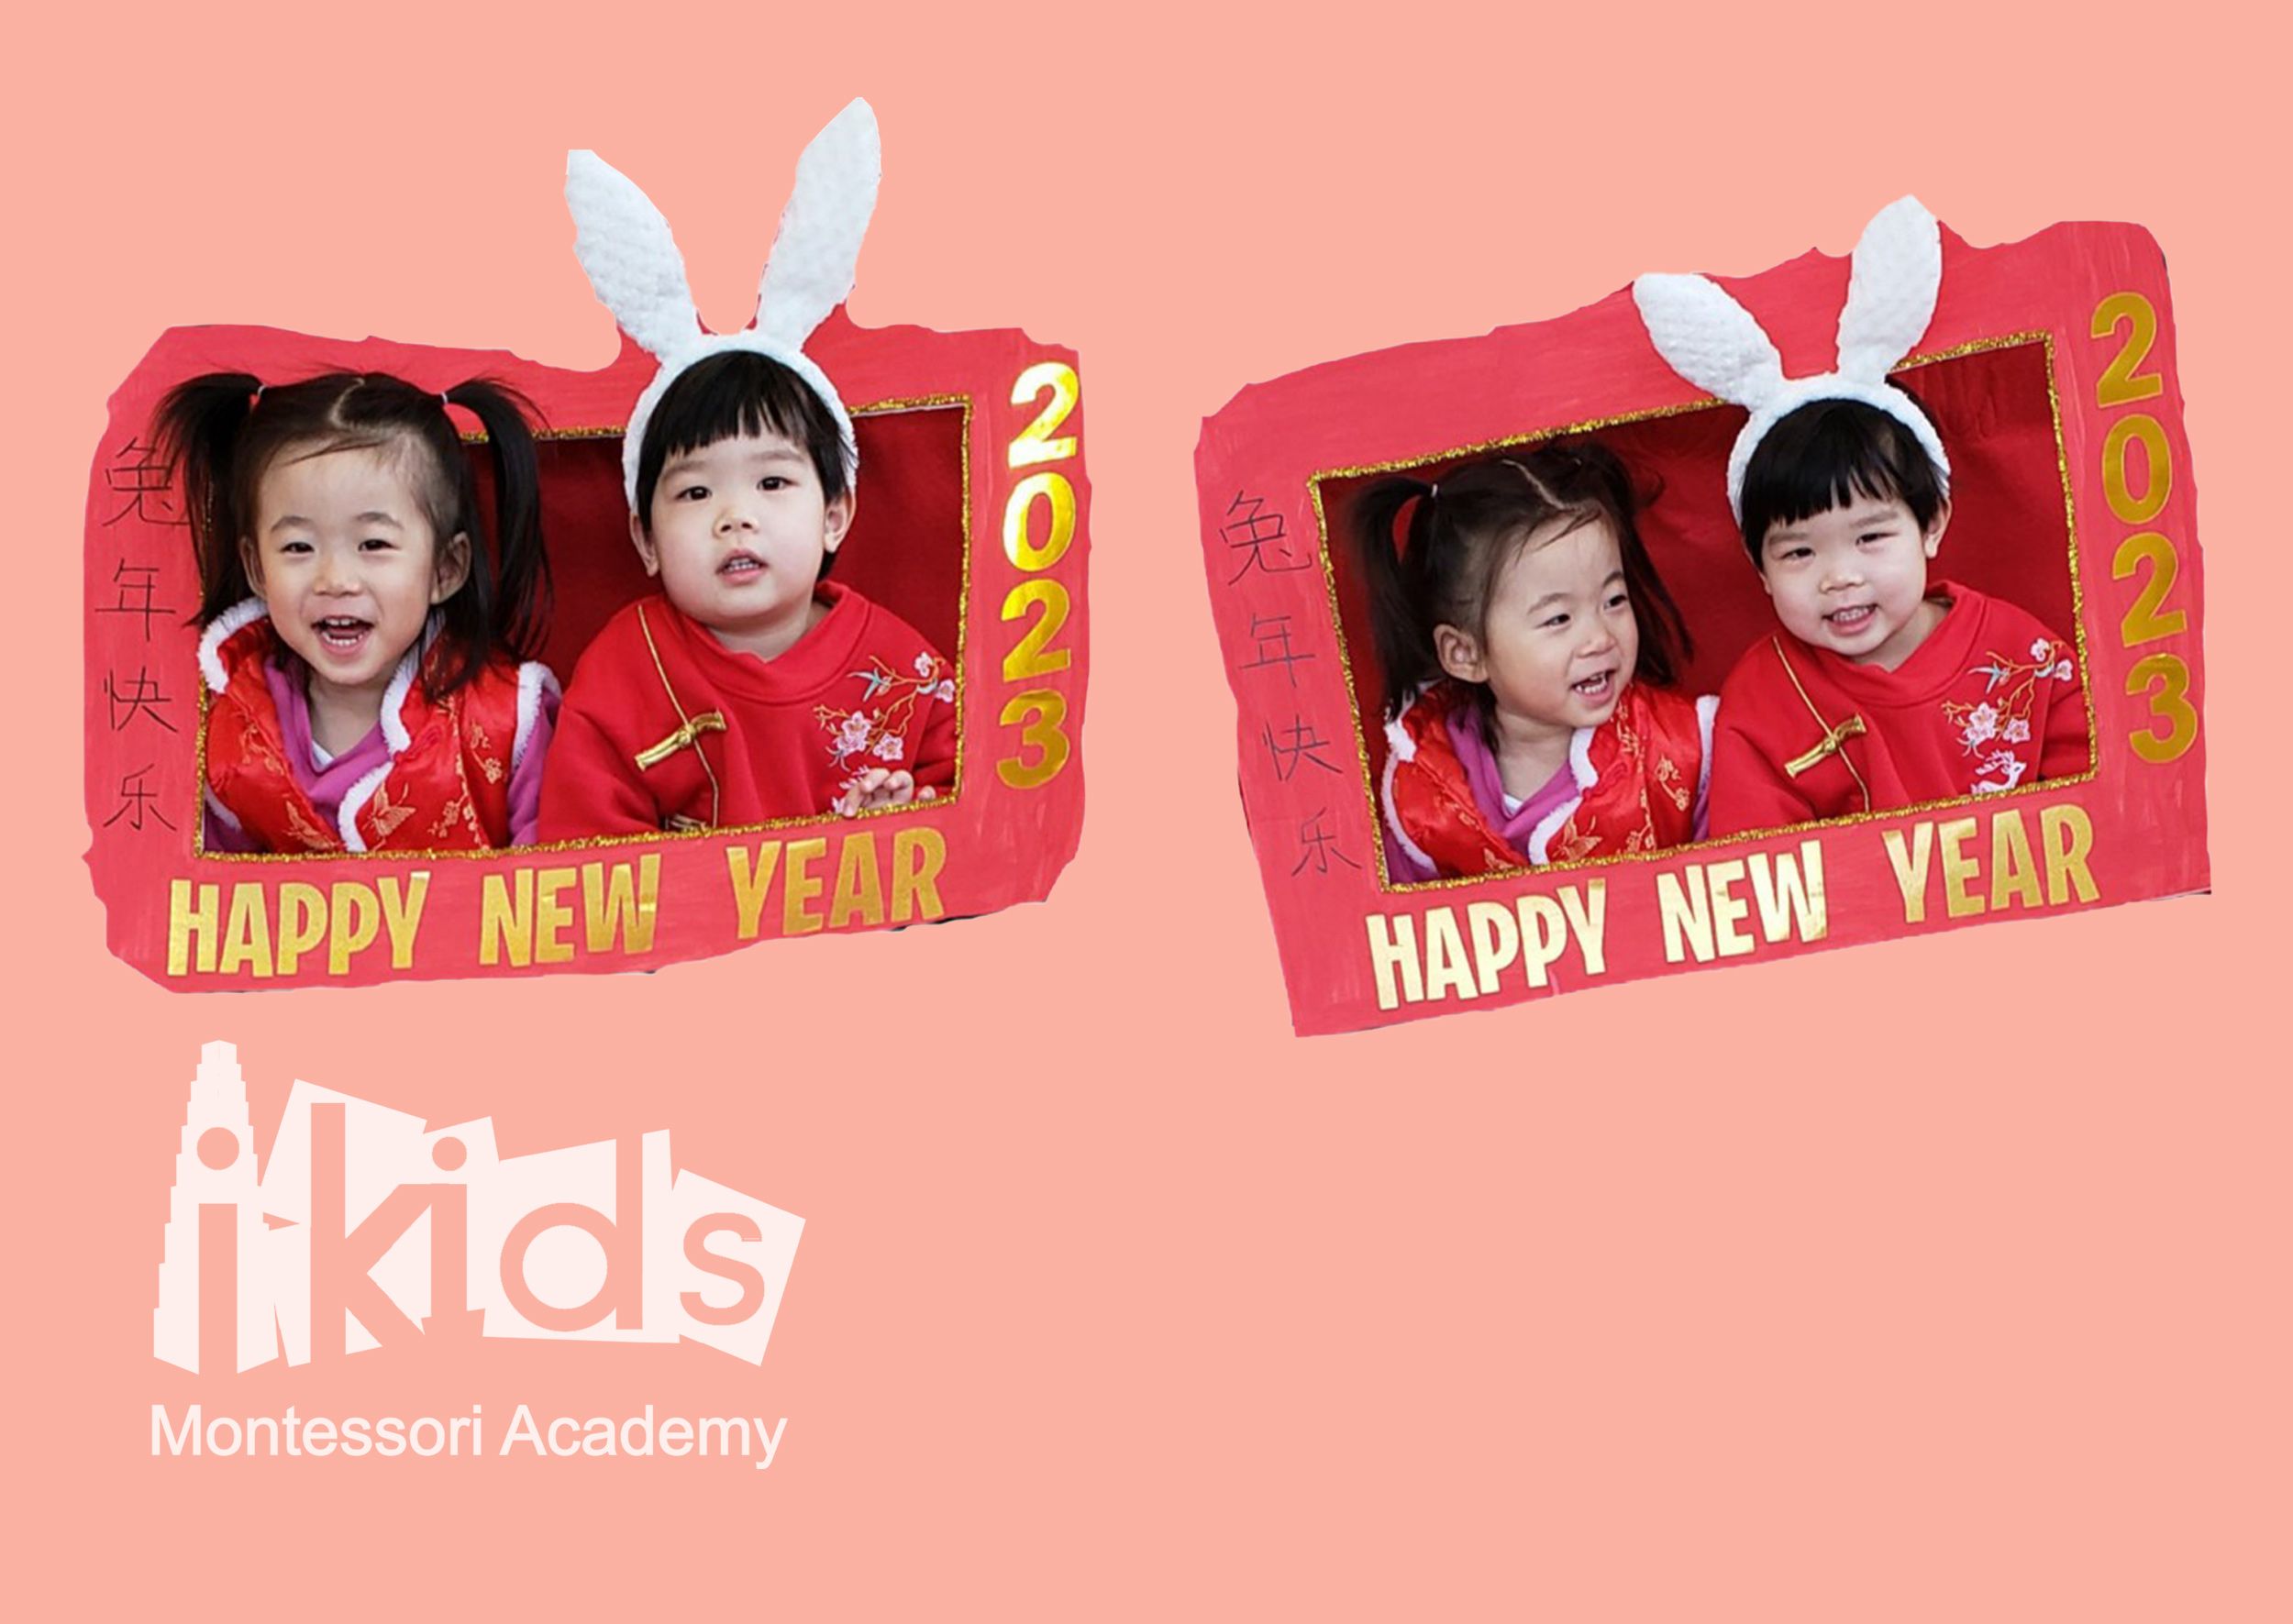 Celebrating Lunar New Year at iKids Montessori Academy